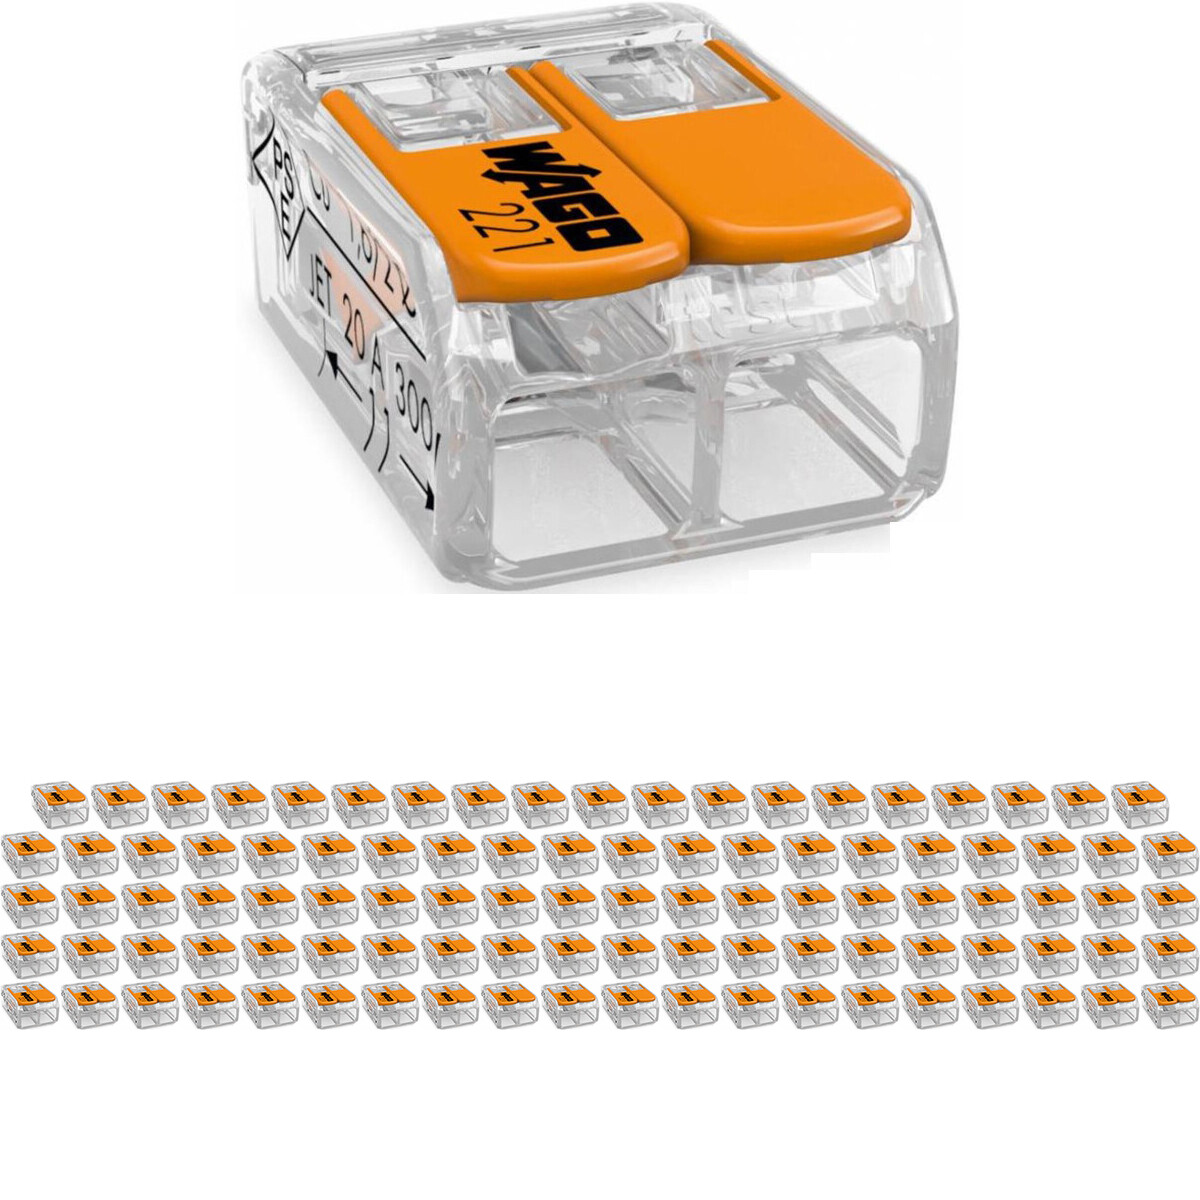 WAGO - Lasklem Set 100 Stuks - 2 Polig met Klemmetjes - Oranje